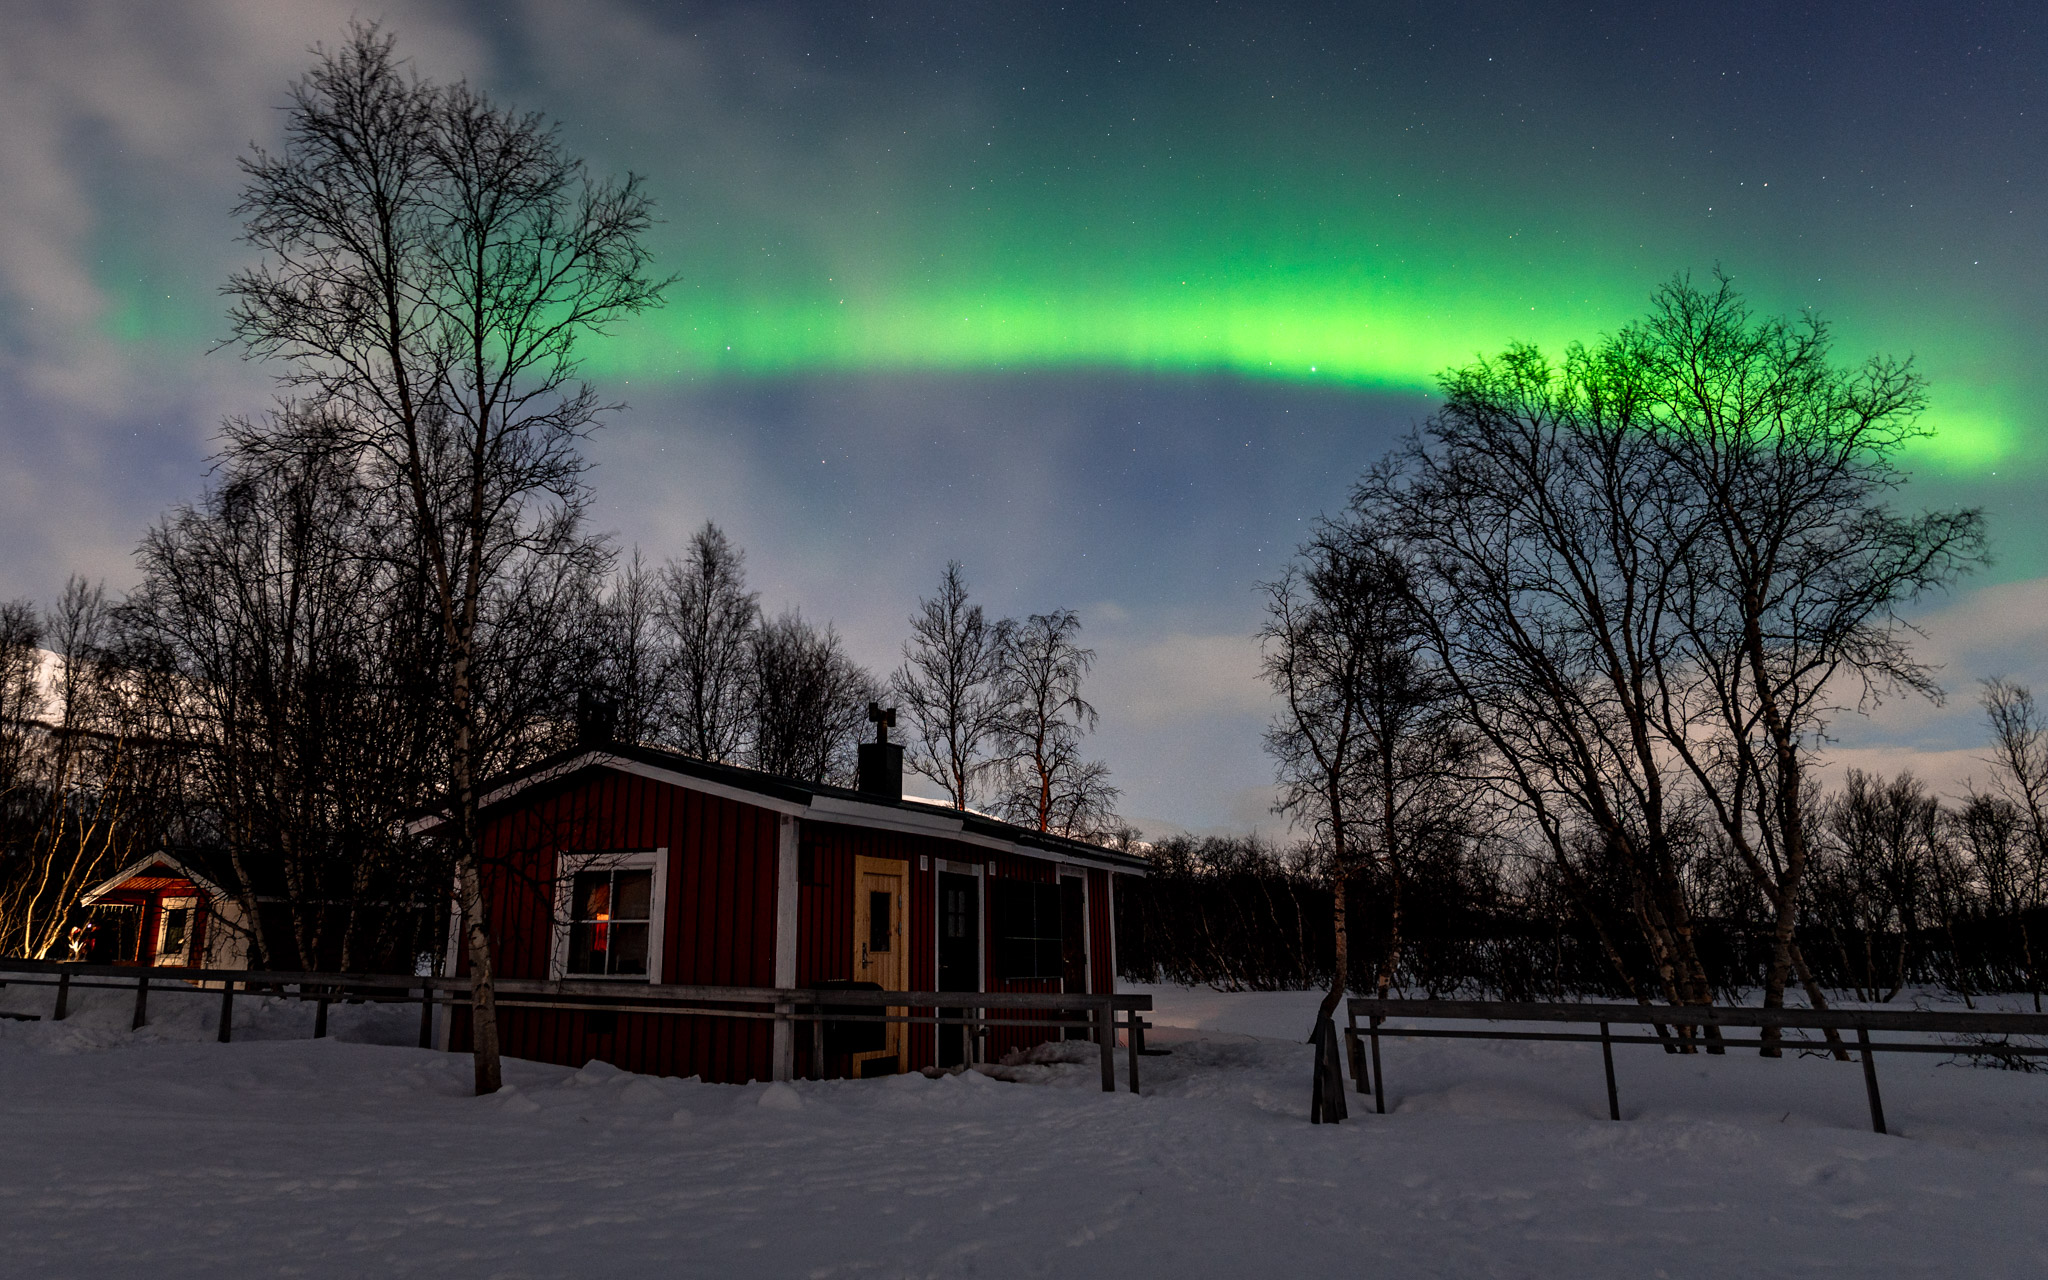 Aurora borealis over the huts in the Sámi village Abiskojaure